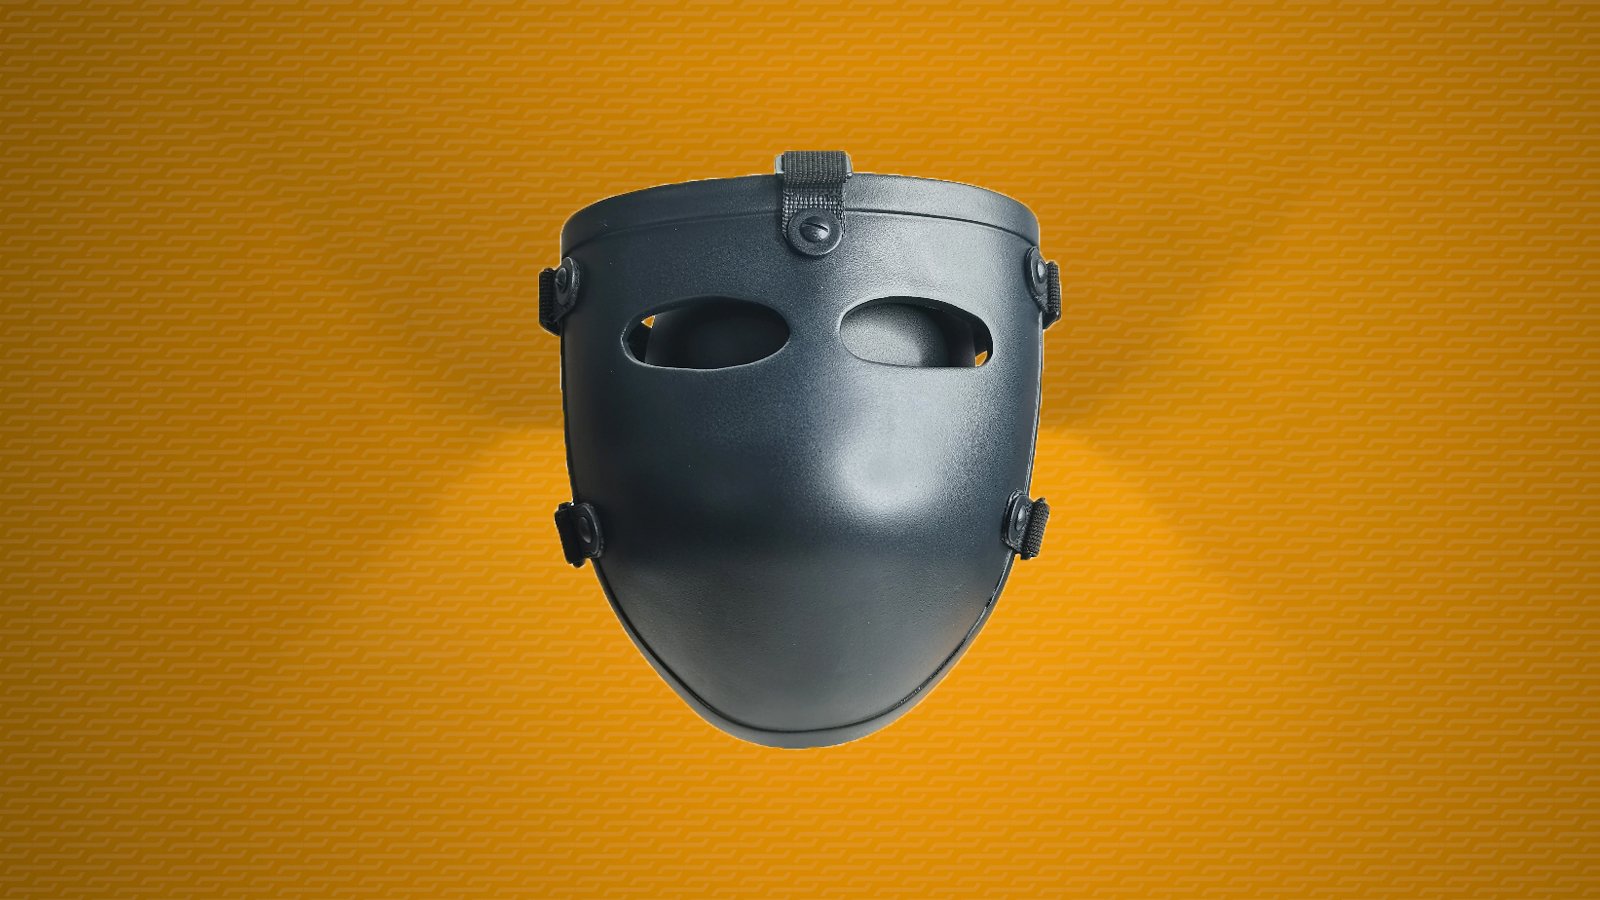 Bulletproof Mask